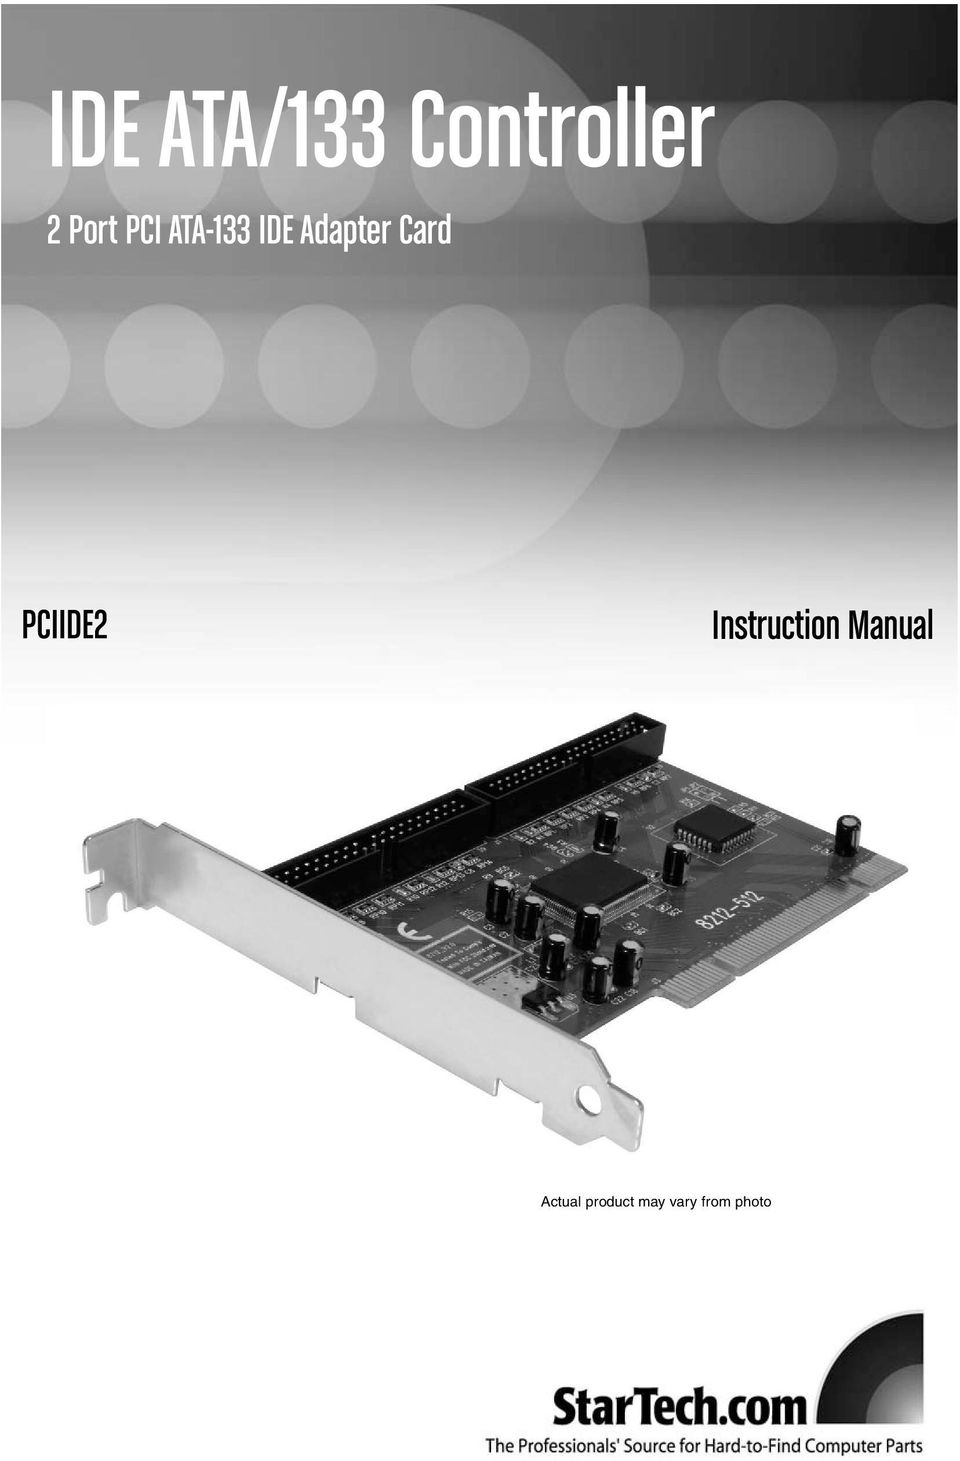 Adapter Card PCIIDE2